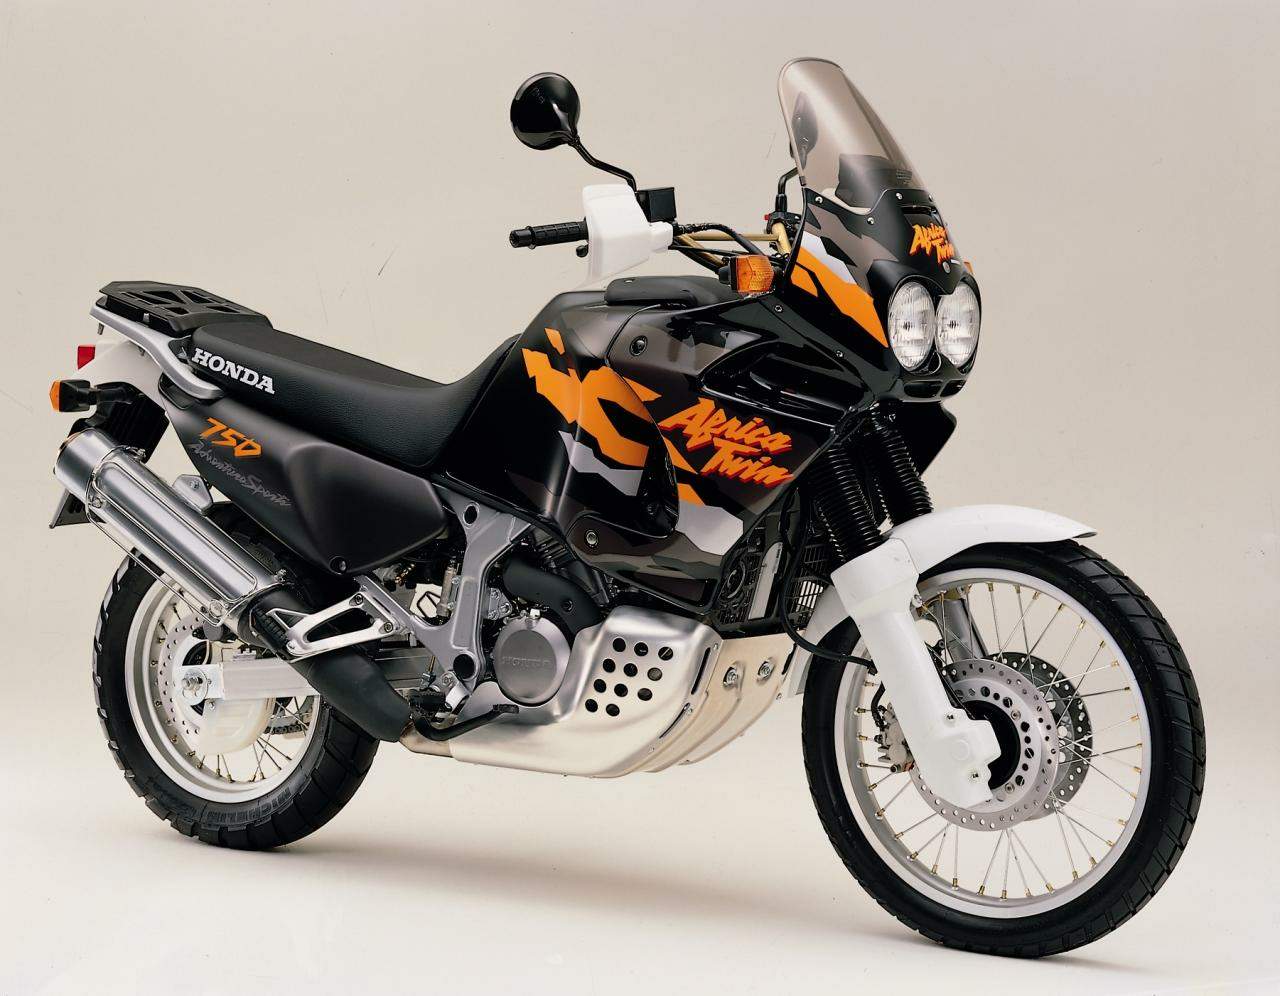 Honda Africa Twin 750 Vs Honda Transalp 600 | Compare Adventure Motorcycle Spec's